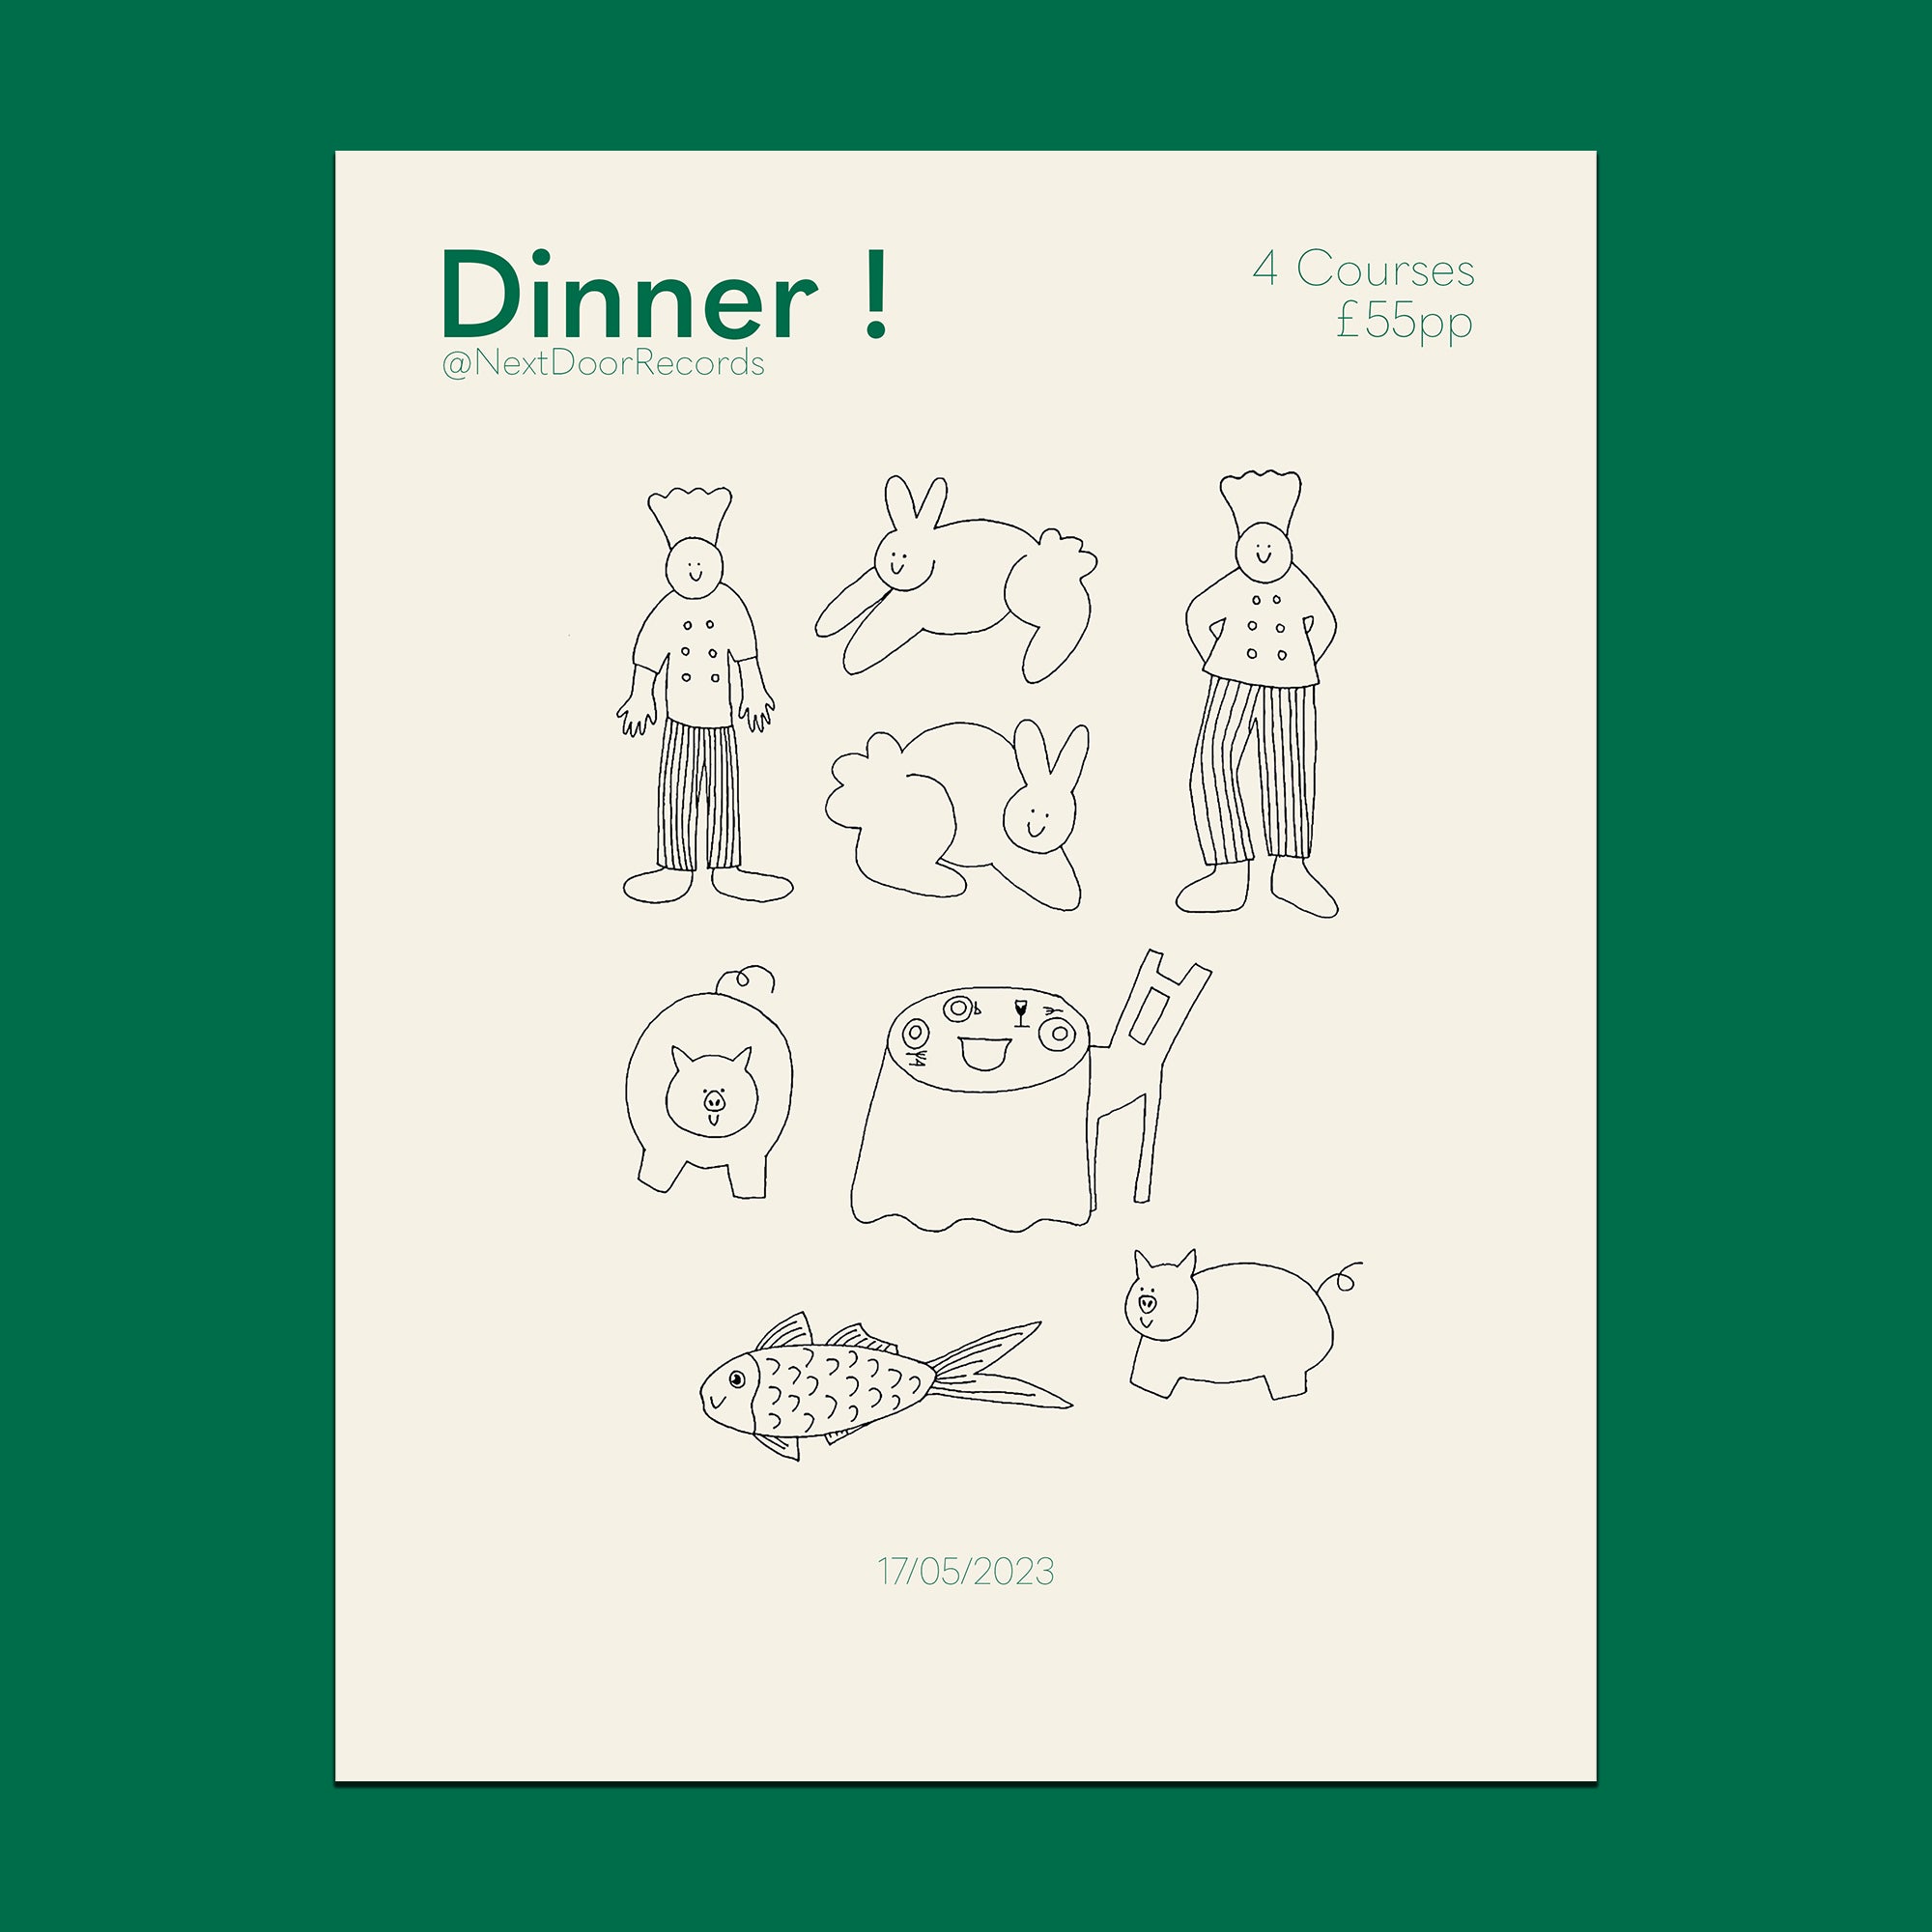 Chris Nam Presents: Dinner!